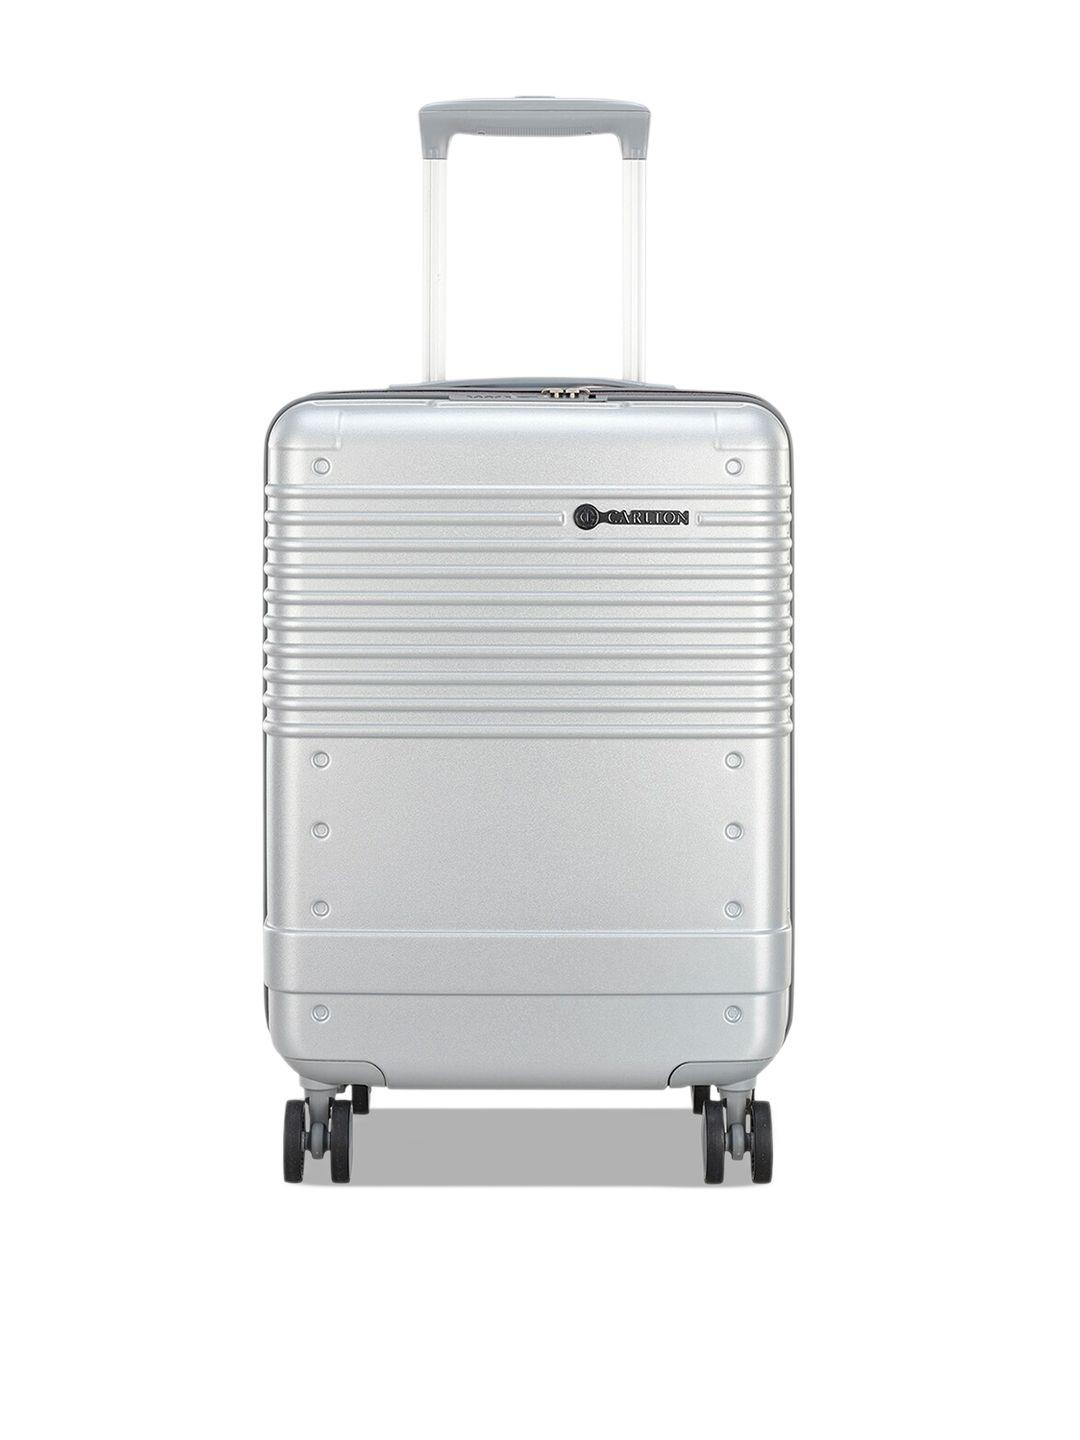 carlton hard-sided 360-degree rotation cabin trolley suitcase